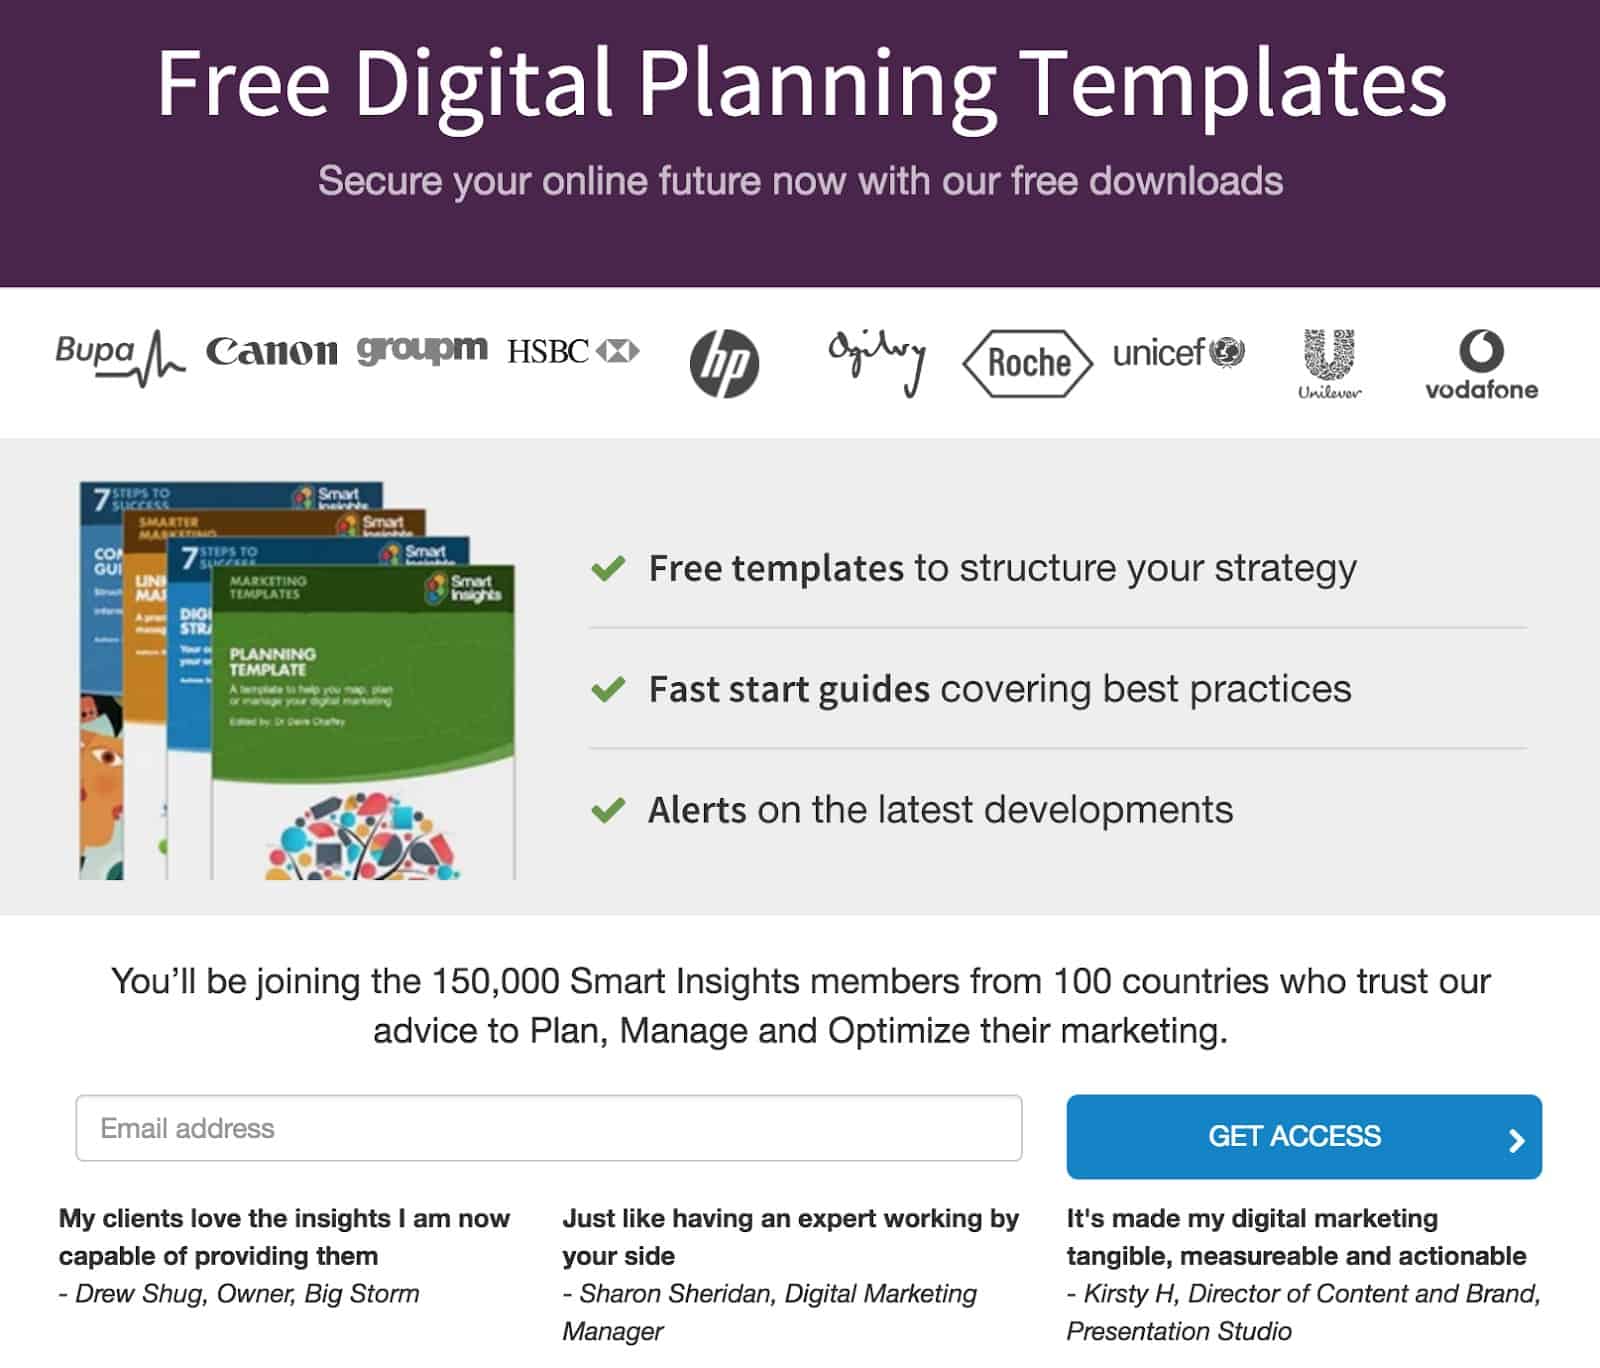 Free digital planning templates